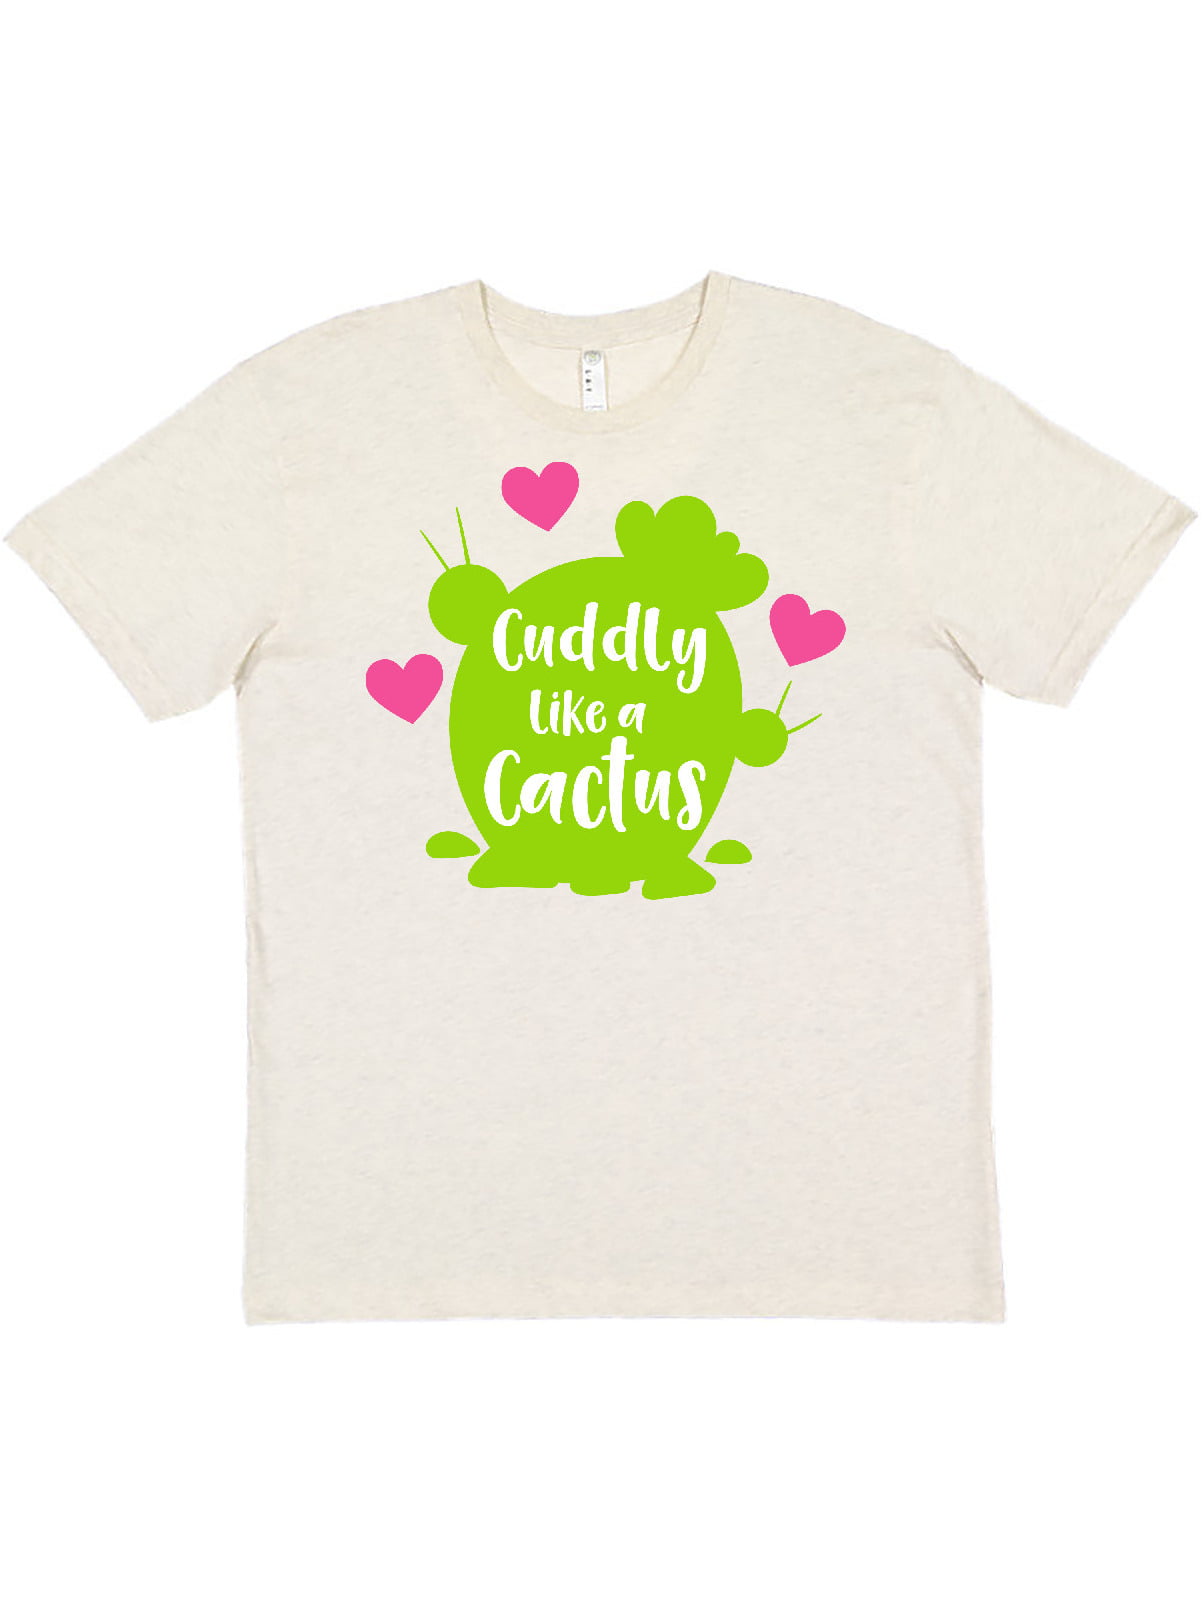 I Heart Love Cactus Silhouette Kids Tee Shirt Boys Girls Unisex 2T-XL 